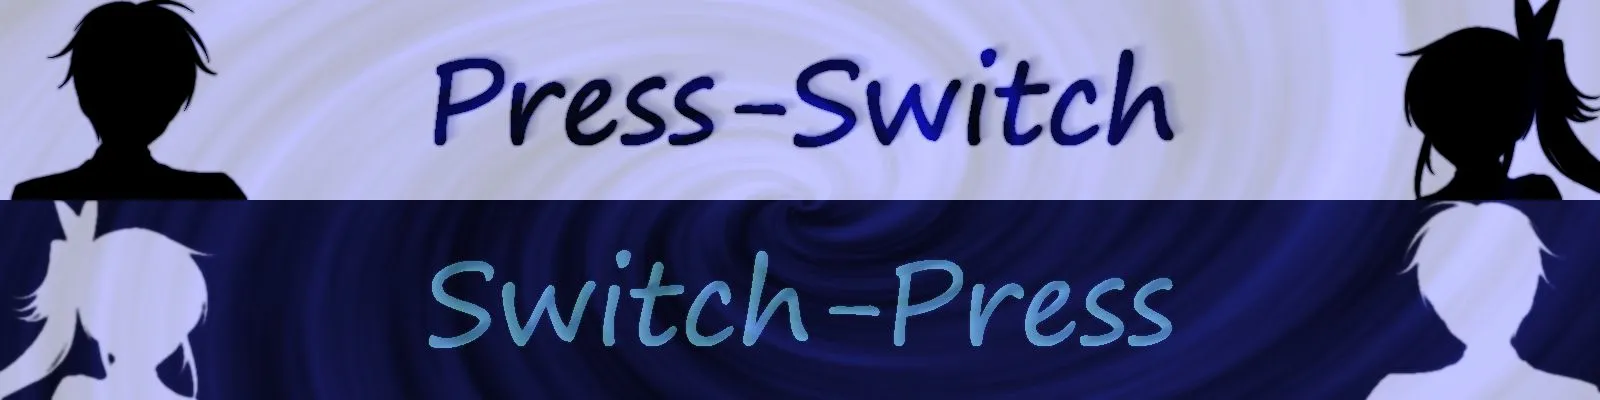 Press-Switch [v0.5c] main image